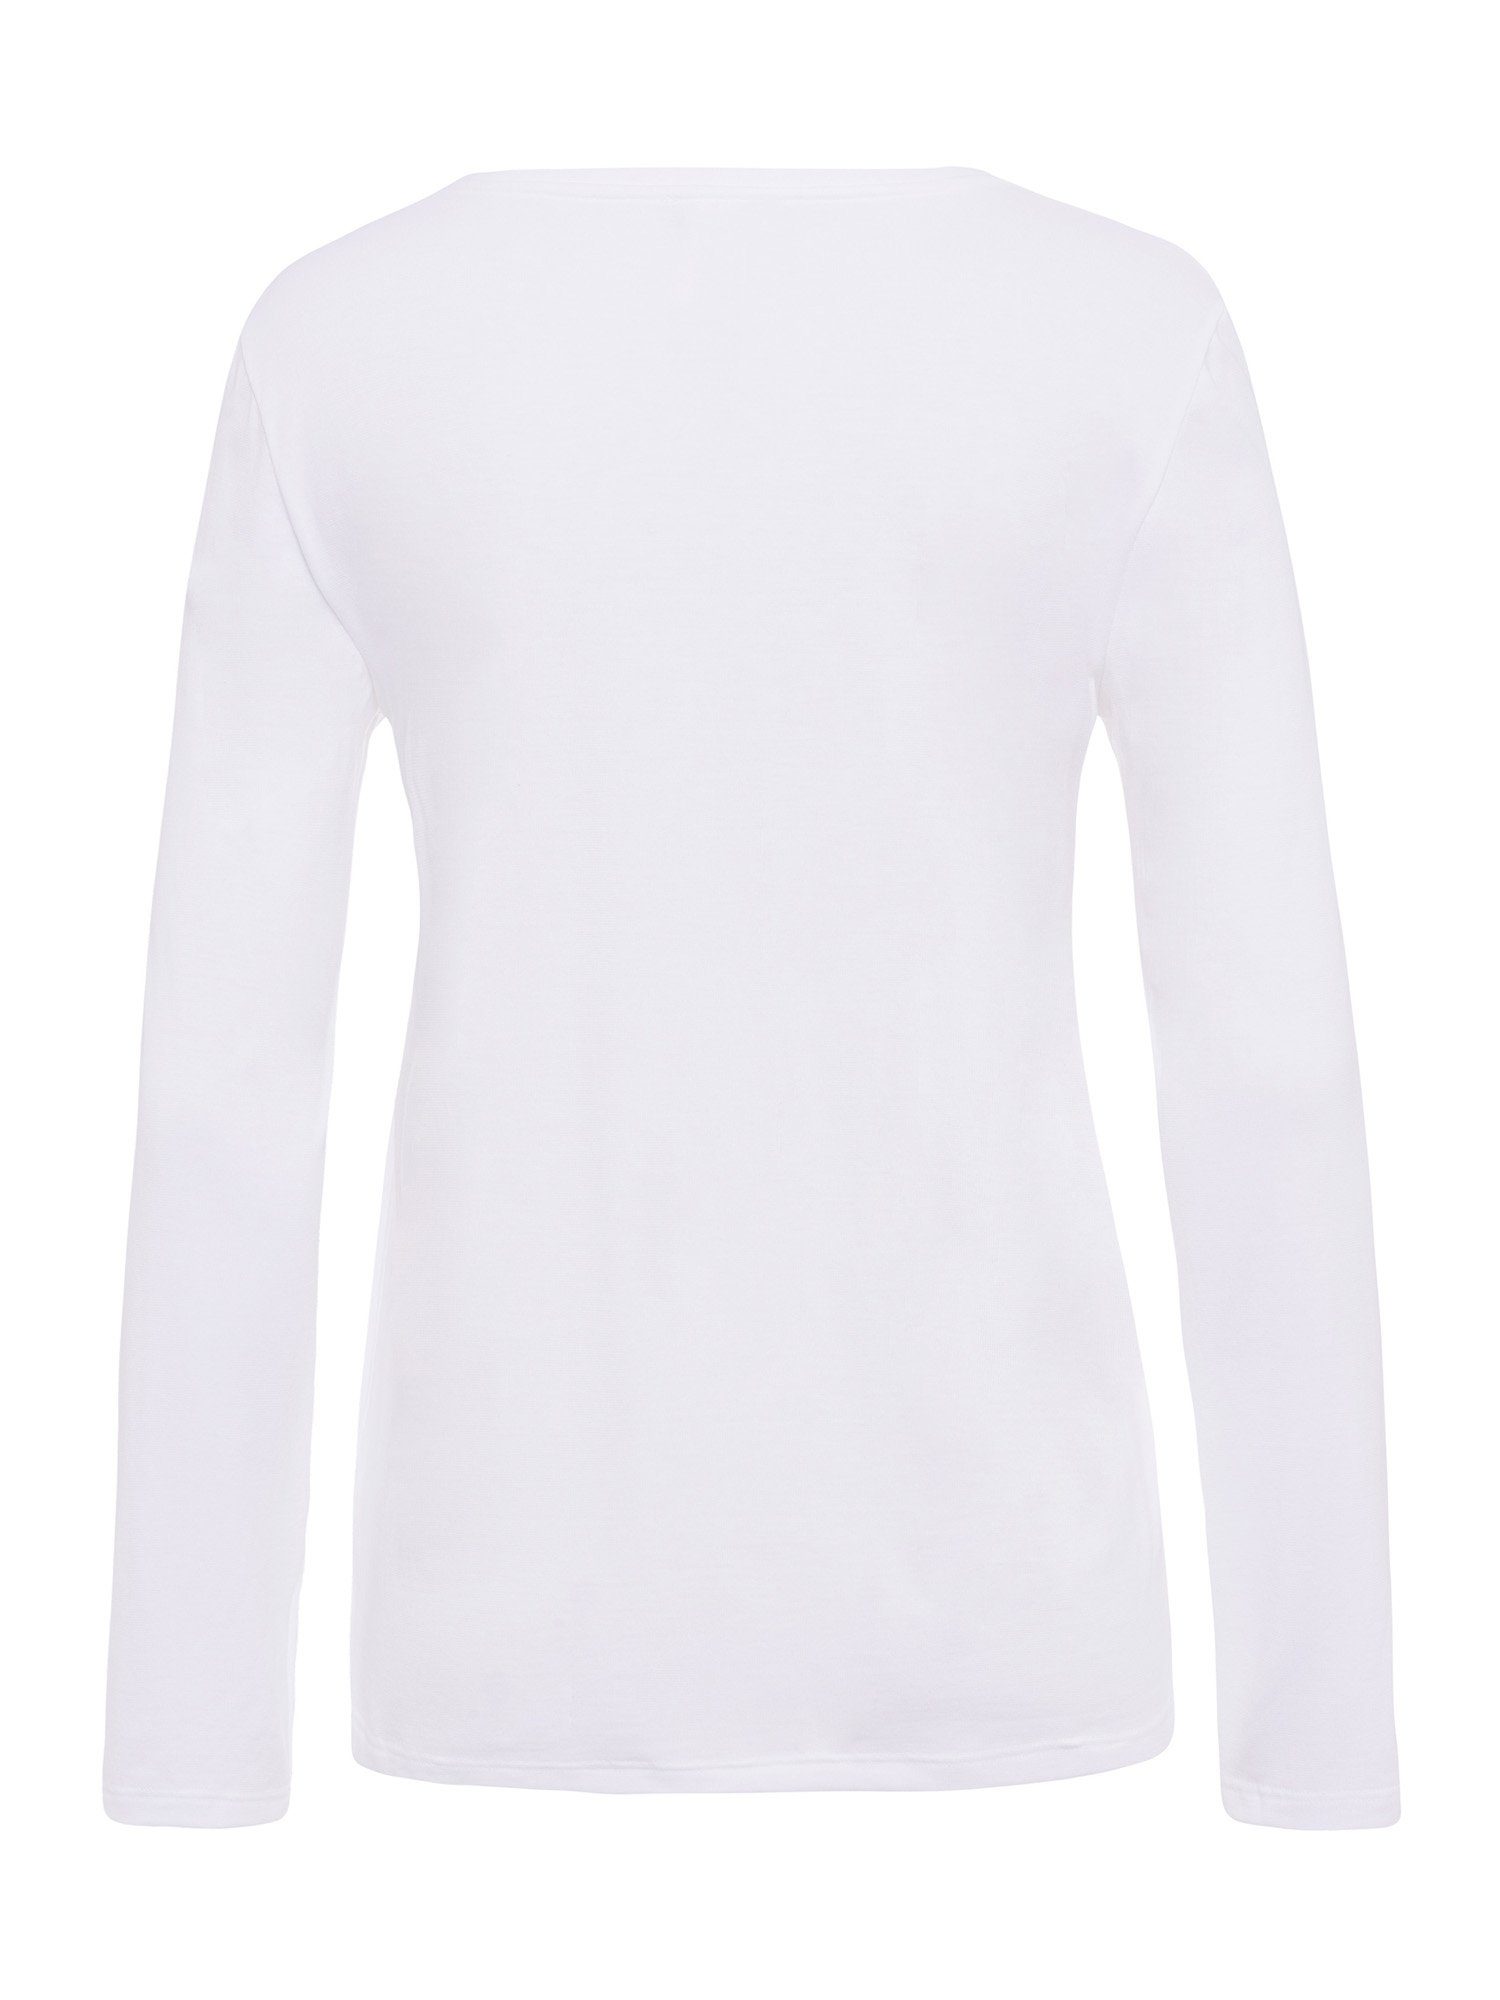 Hanro Pyjamaoberteil Sleep & Lounge white unterhemd shirt langarm